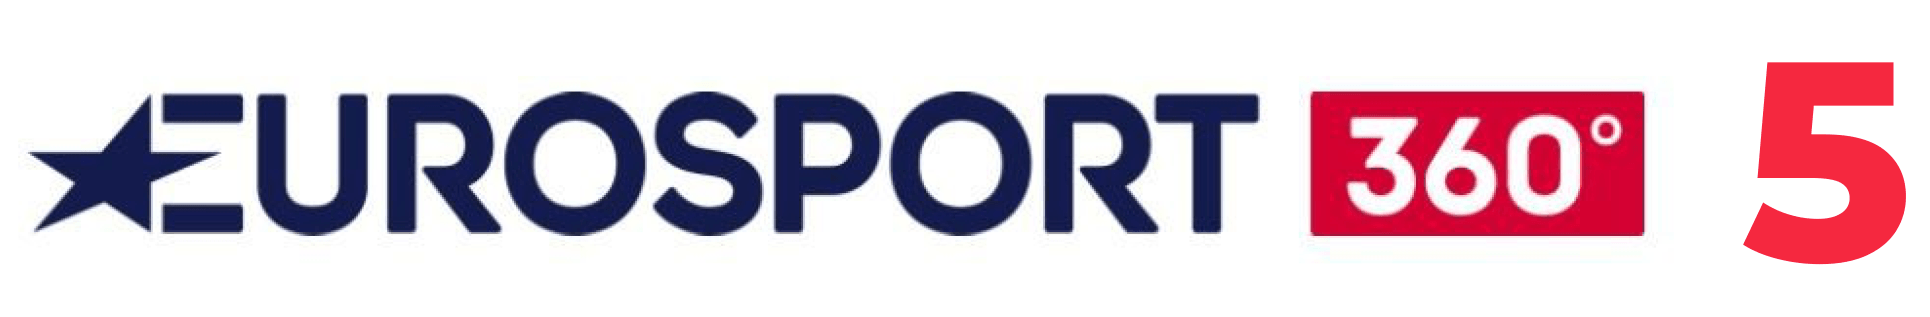 Le numéro de la chaîne TV Eurosport 360 5.